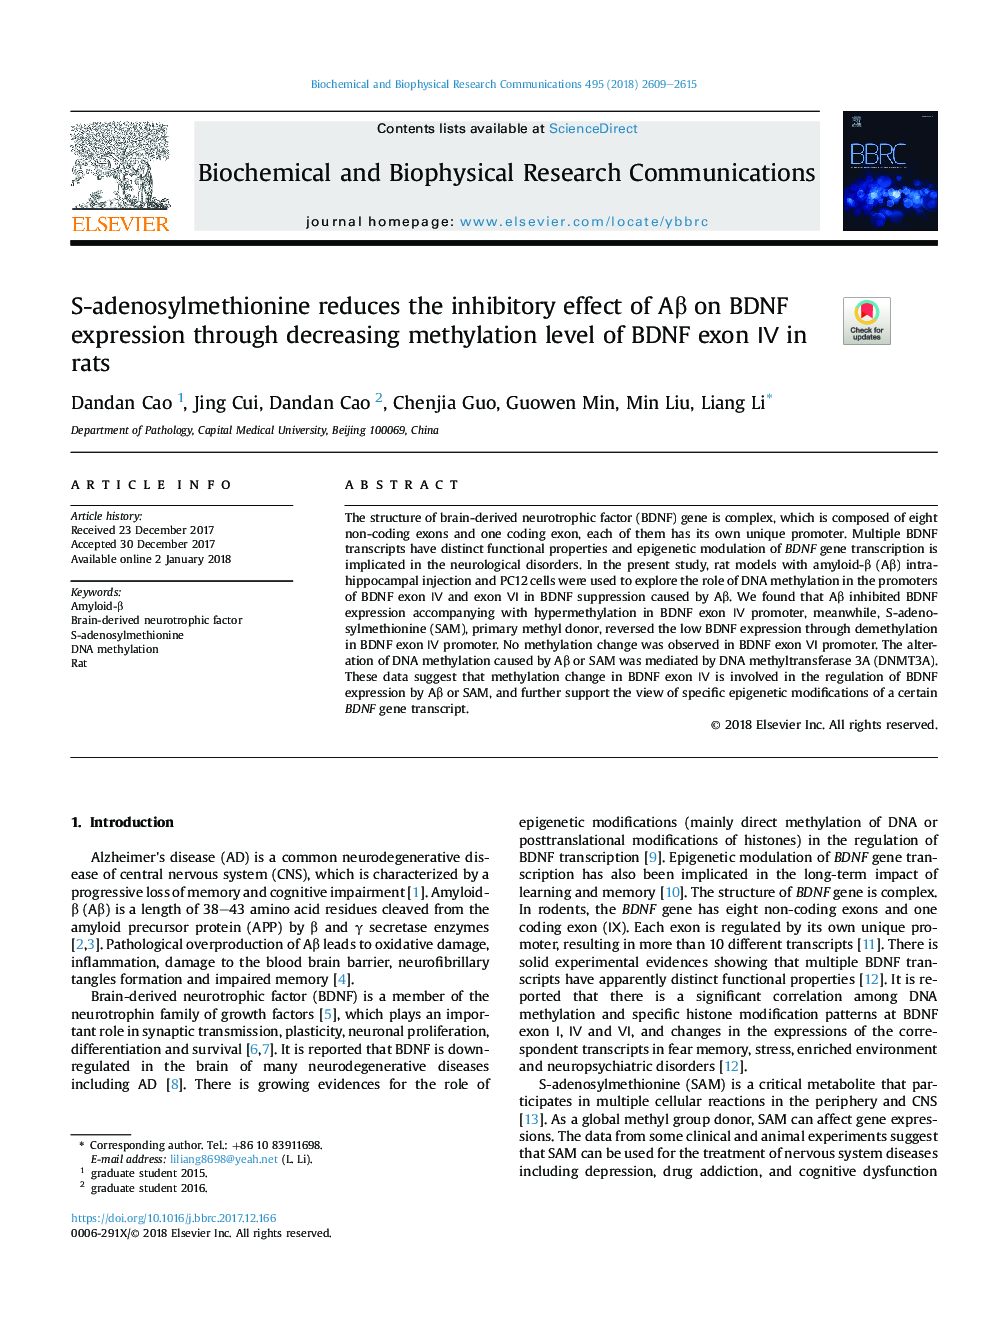 S-adenosylmethionine reduces the inhibitory effect of AÎ² on BDNF expression through decreasing methylation level of BDNF exon â£ in rats